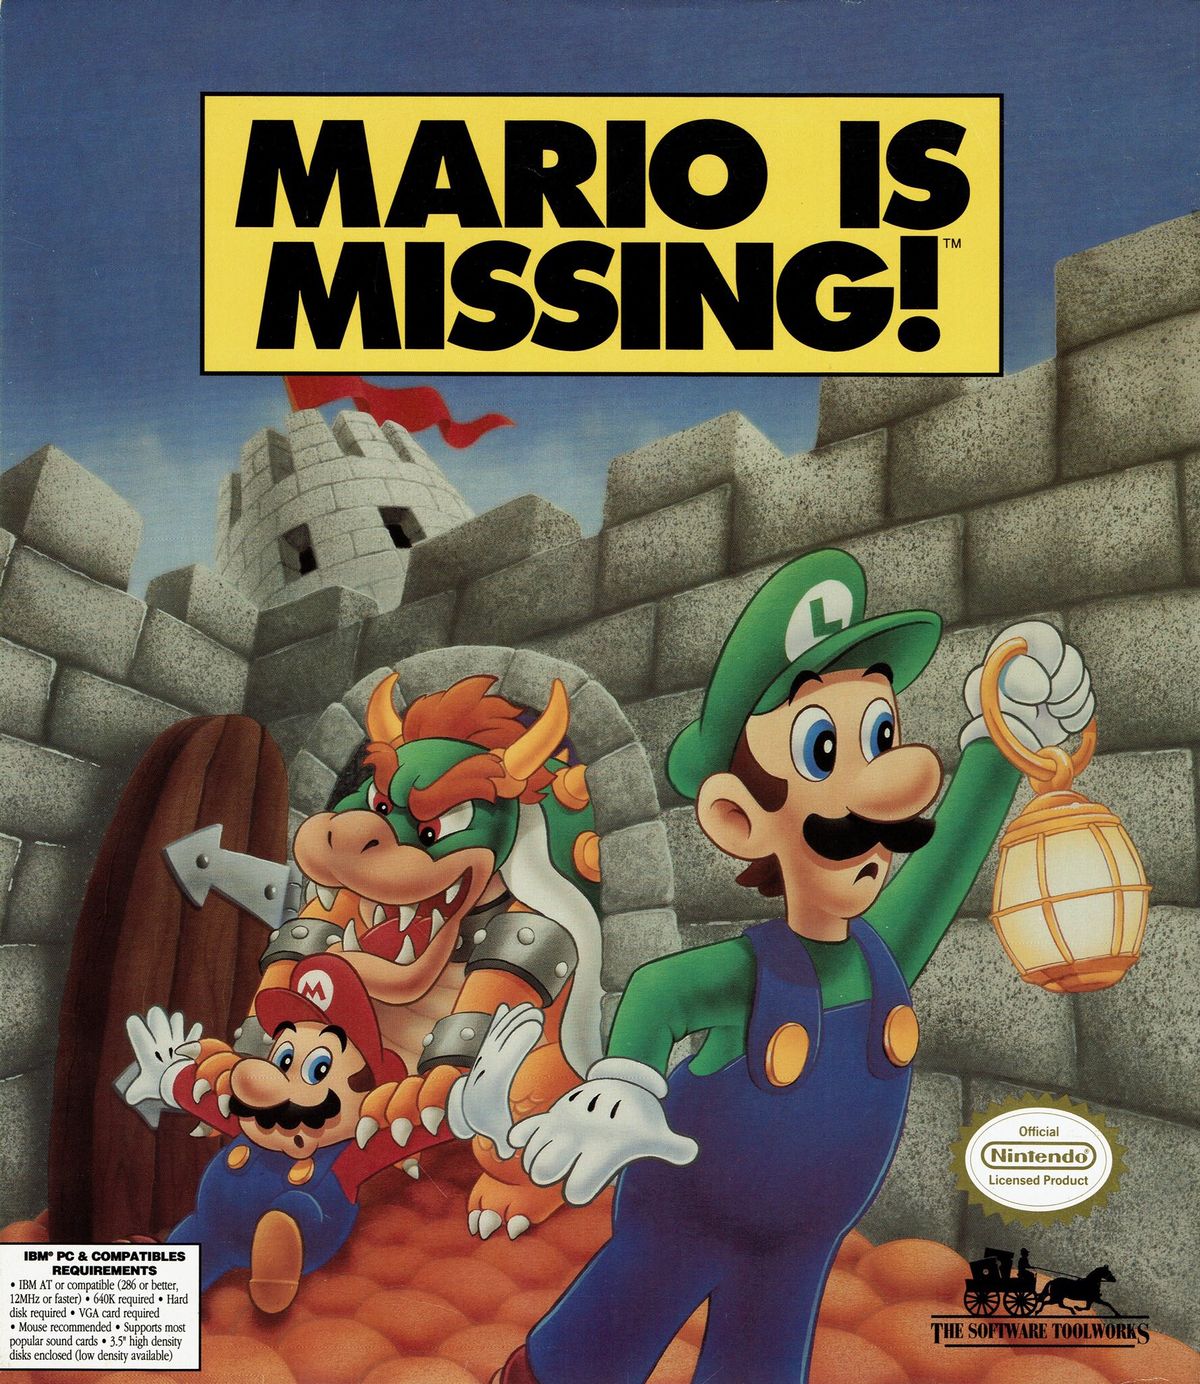 Mario is missing princess peach